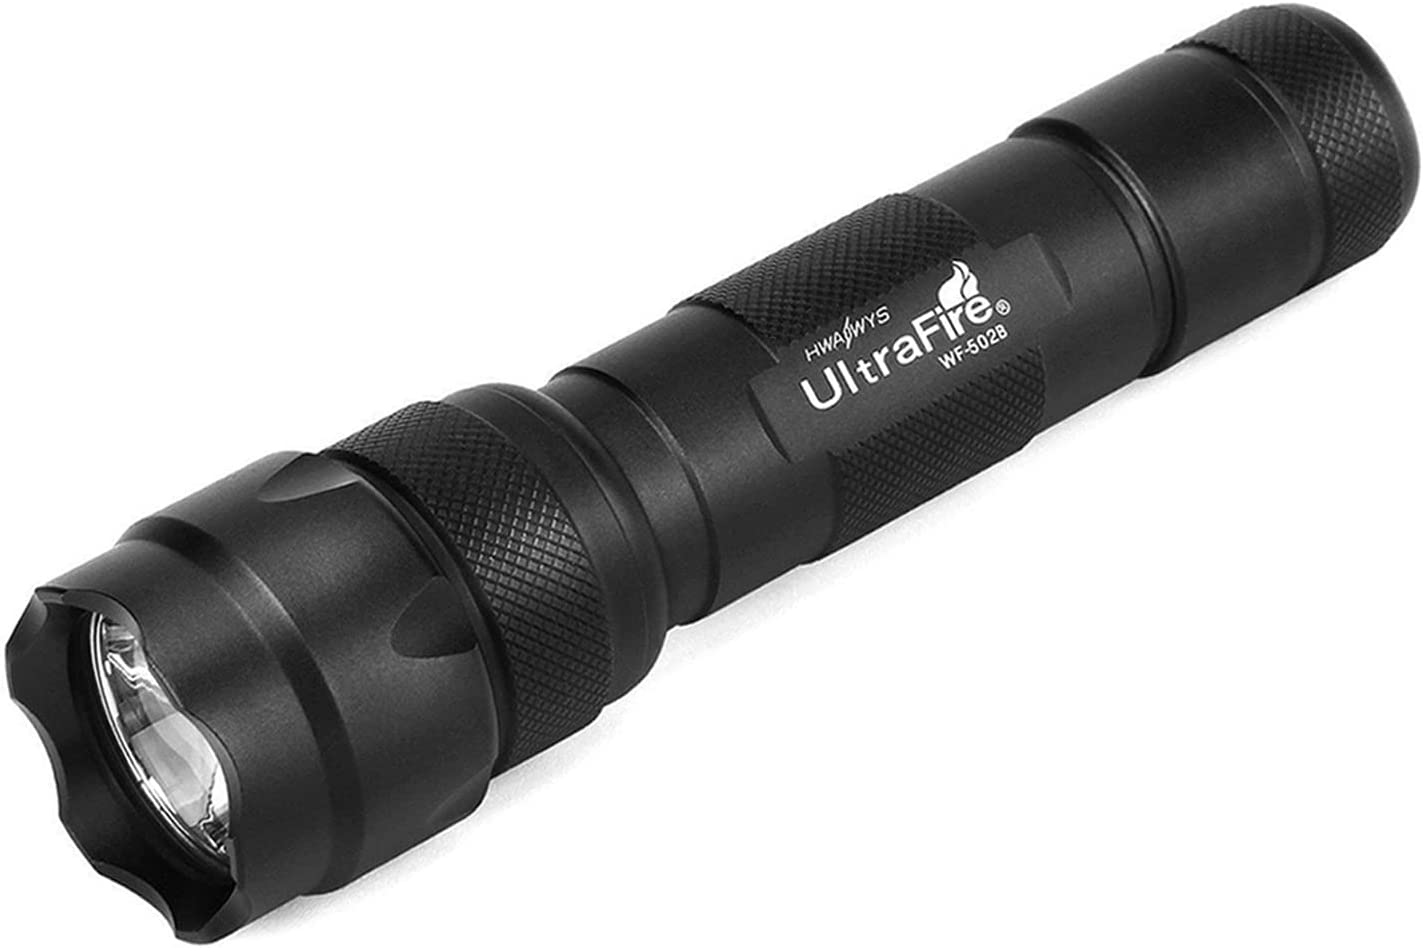 Ultrafire WF-502B Mini LED Flashlight 1000 Lumens Single Mode Tactical EDC Emergency Flashlight Waterproof Small Portable Bright Torch (Battery Not Included)